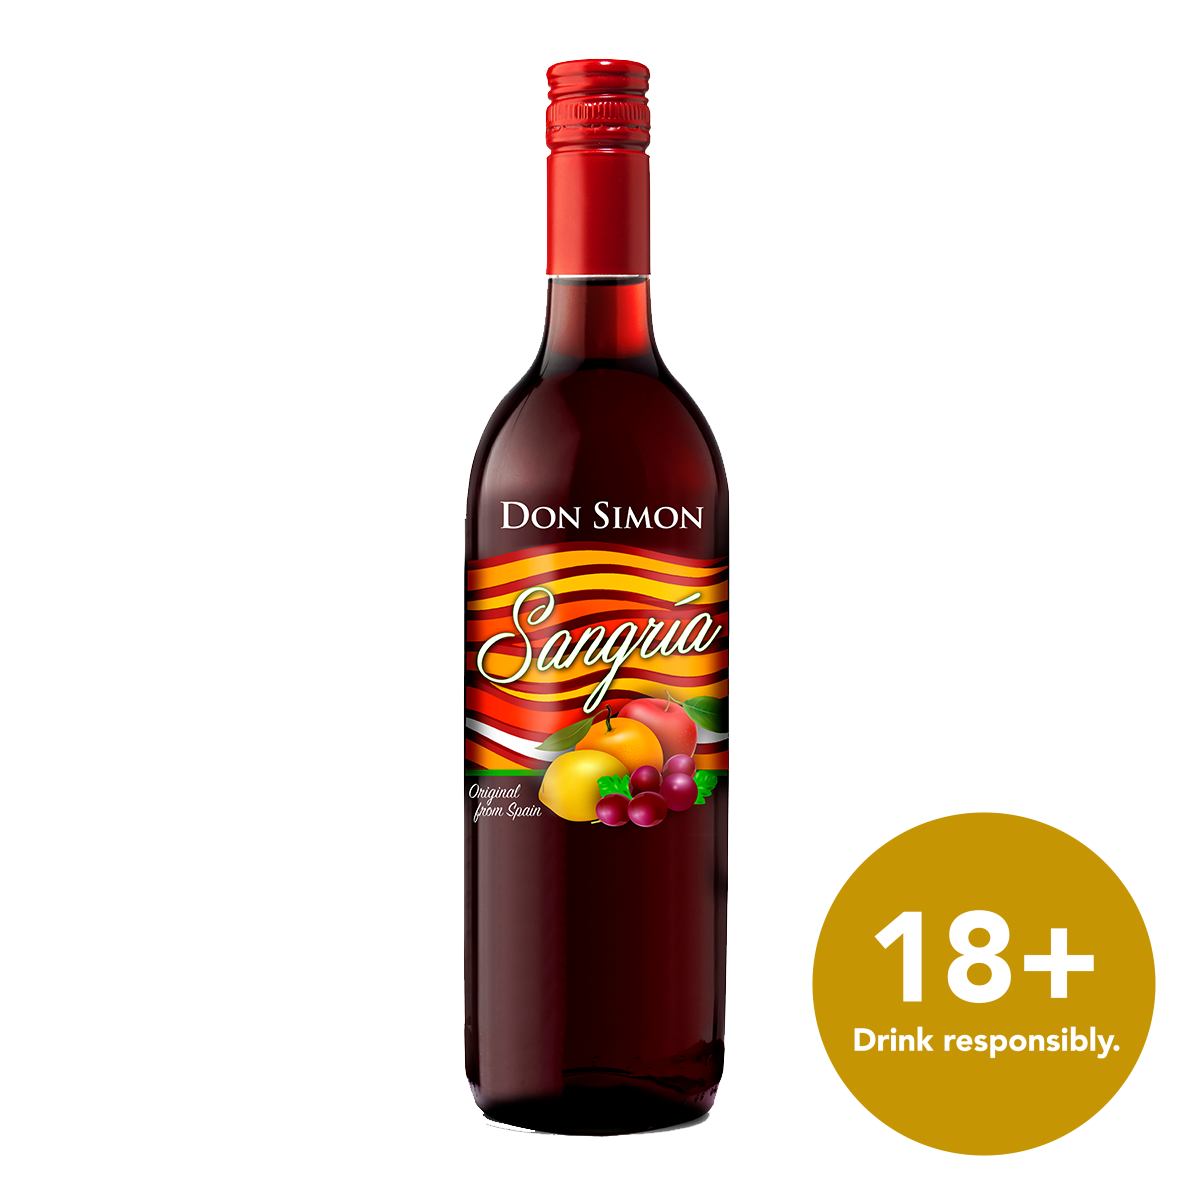 Don Simon Sangria (75cL bottle)